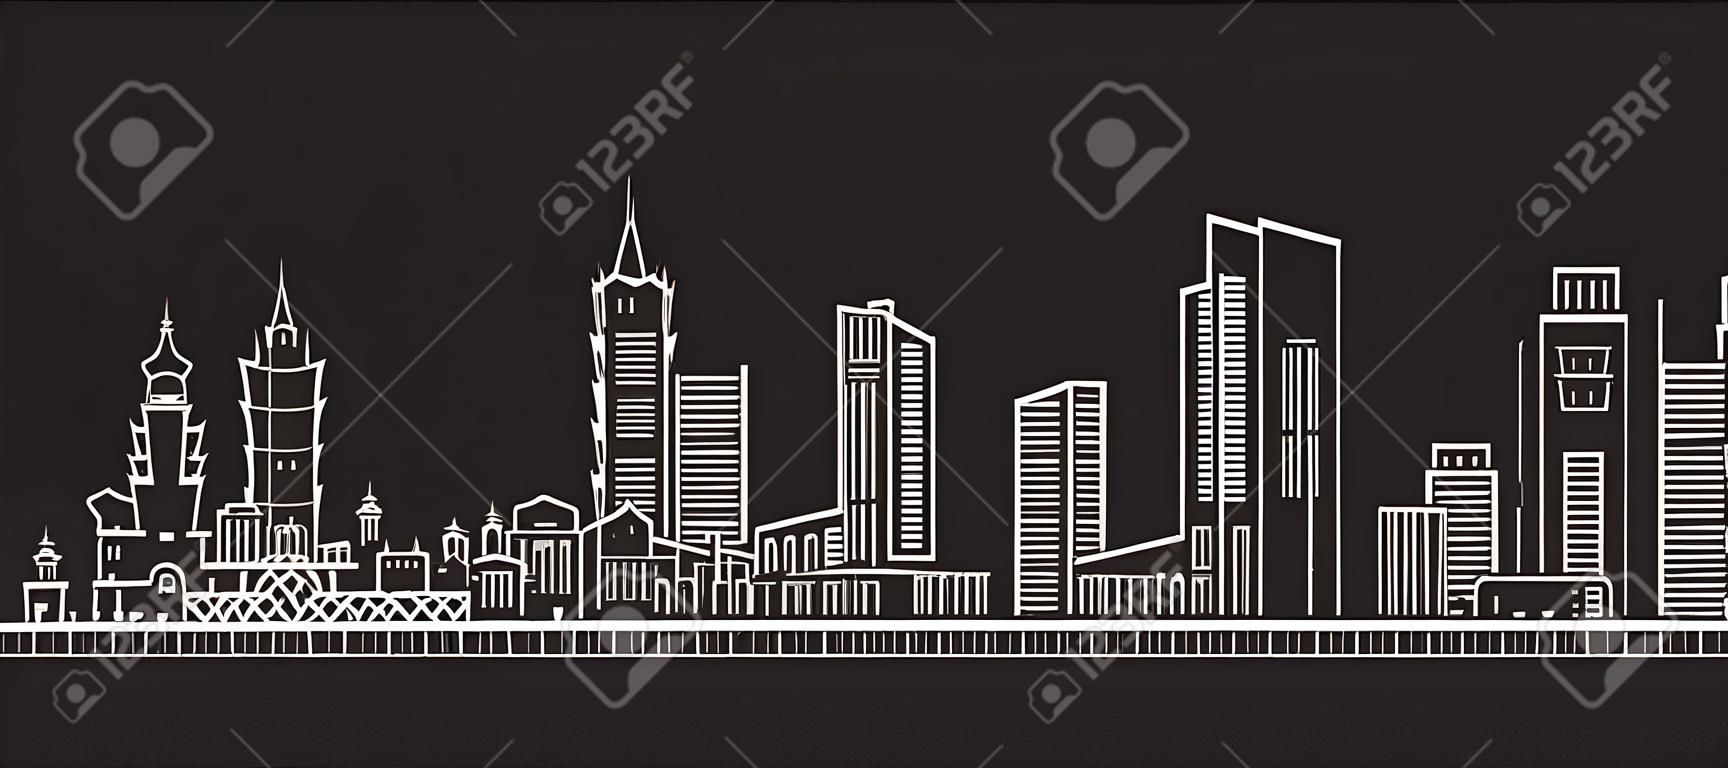 Cityscape Building Line art Vector Illustration design - Macau city